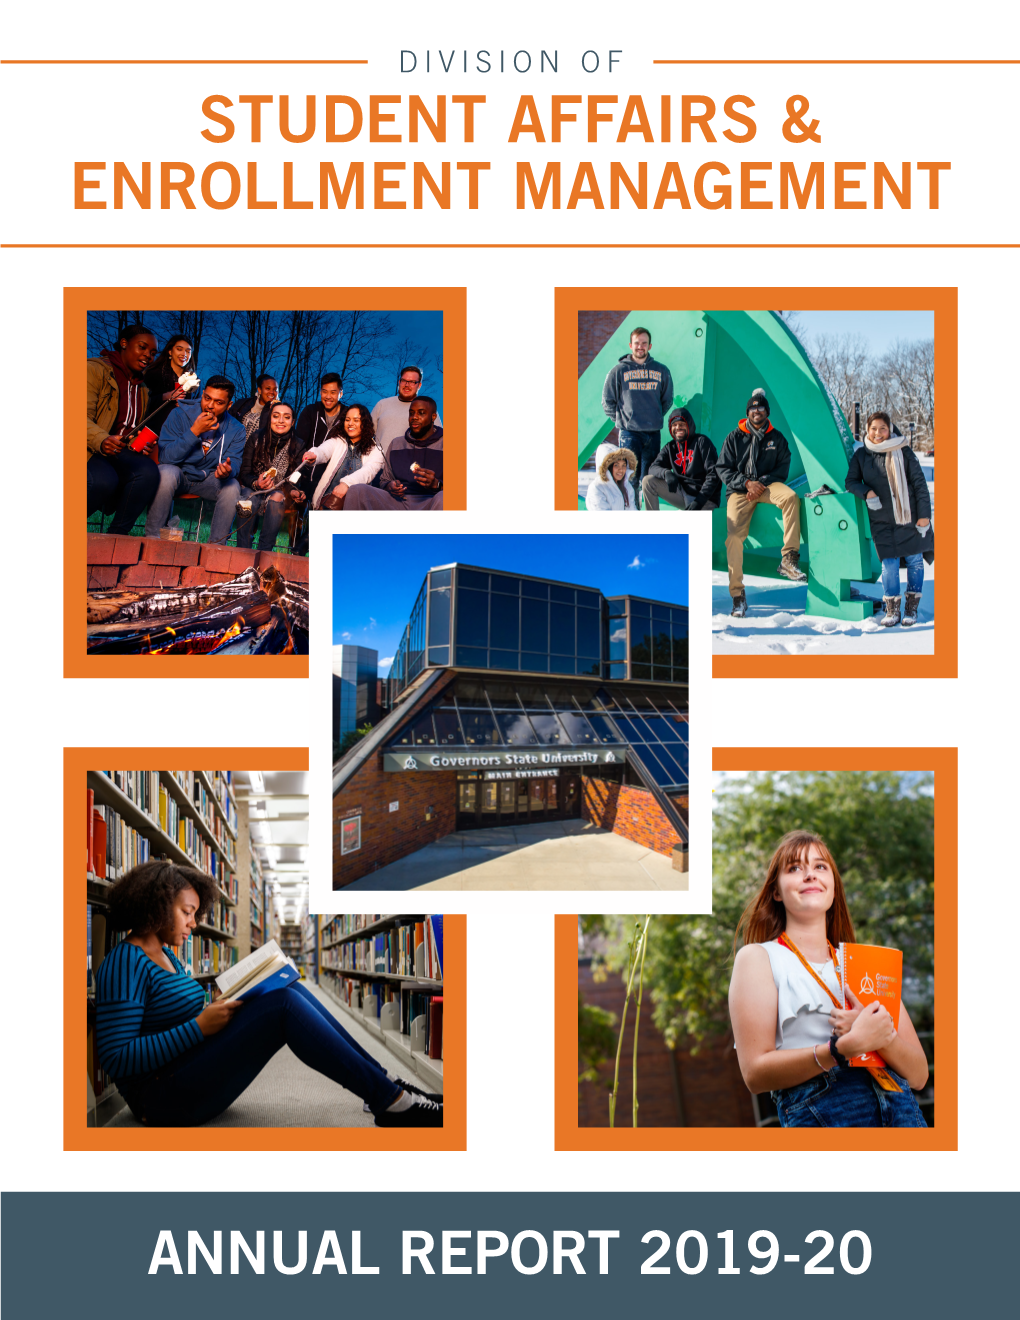 Student Affairs & Enrollment Management